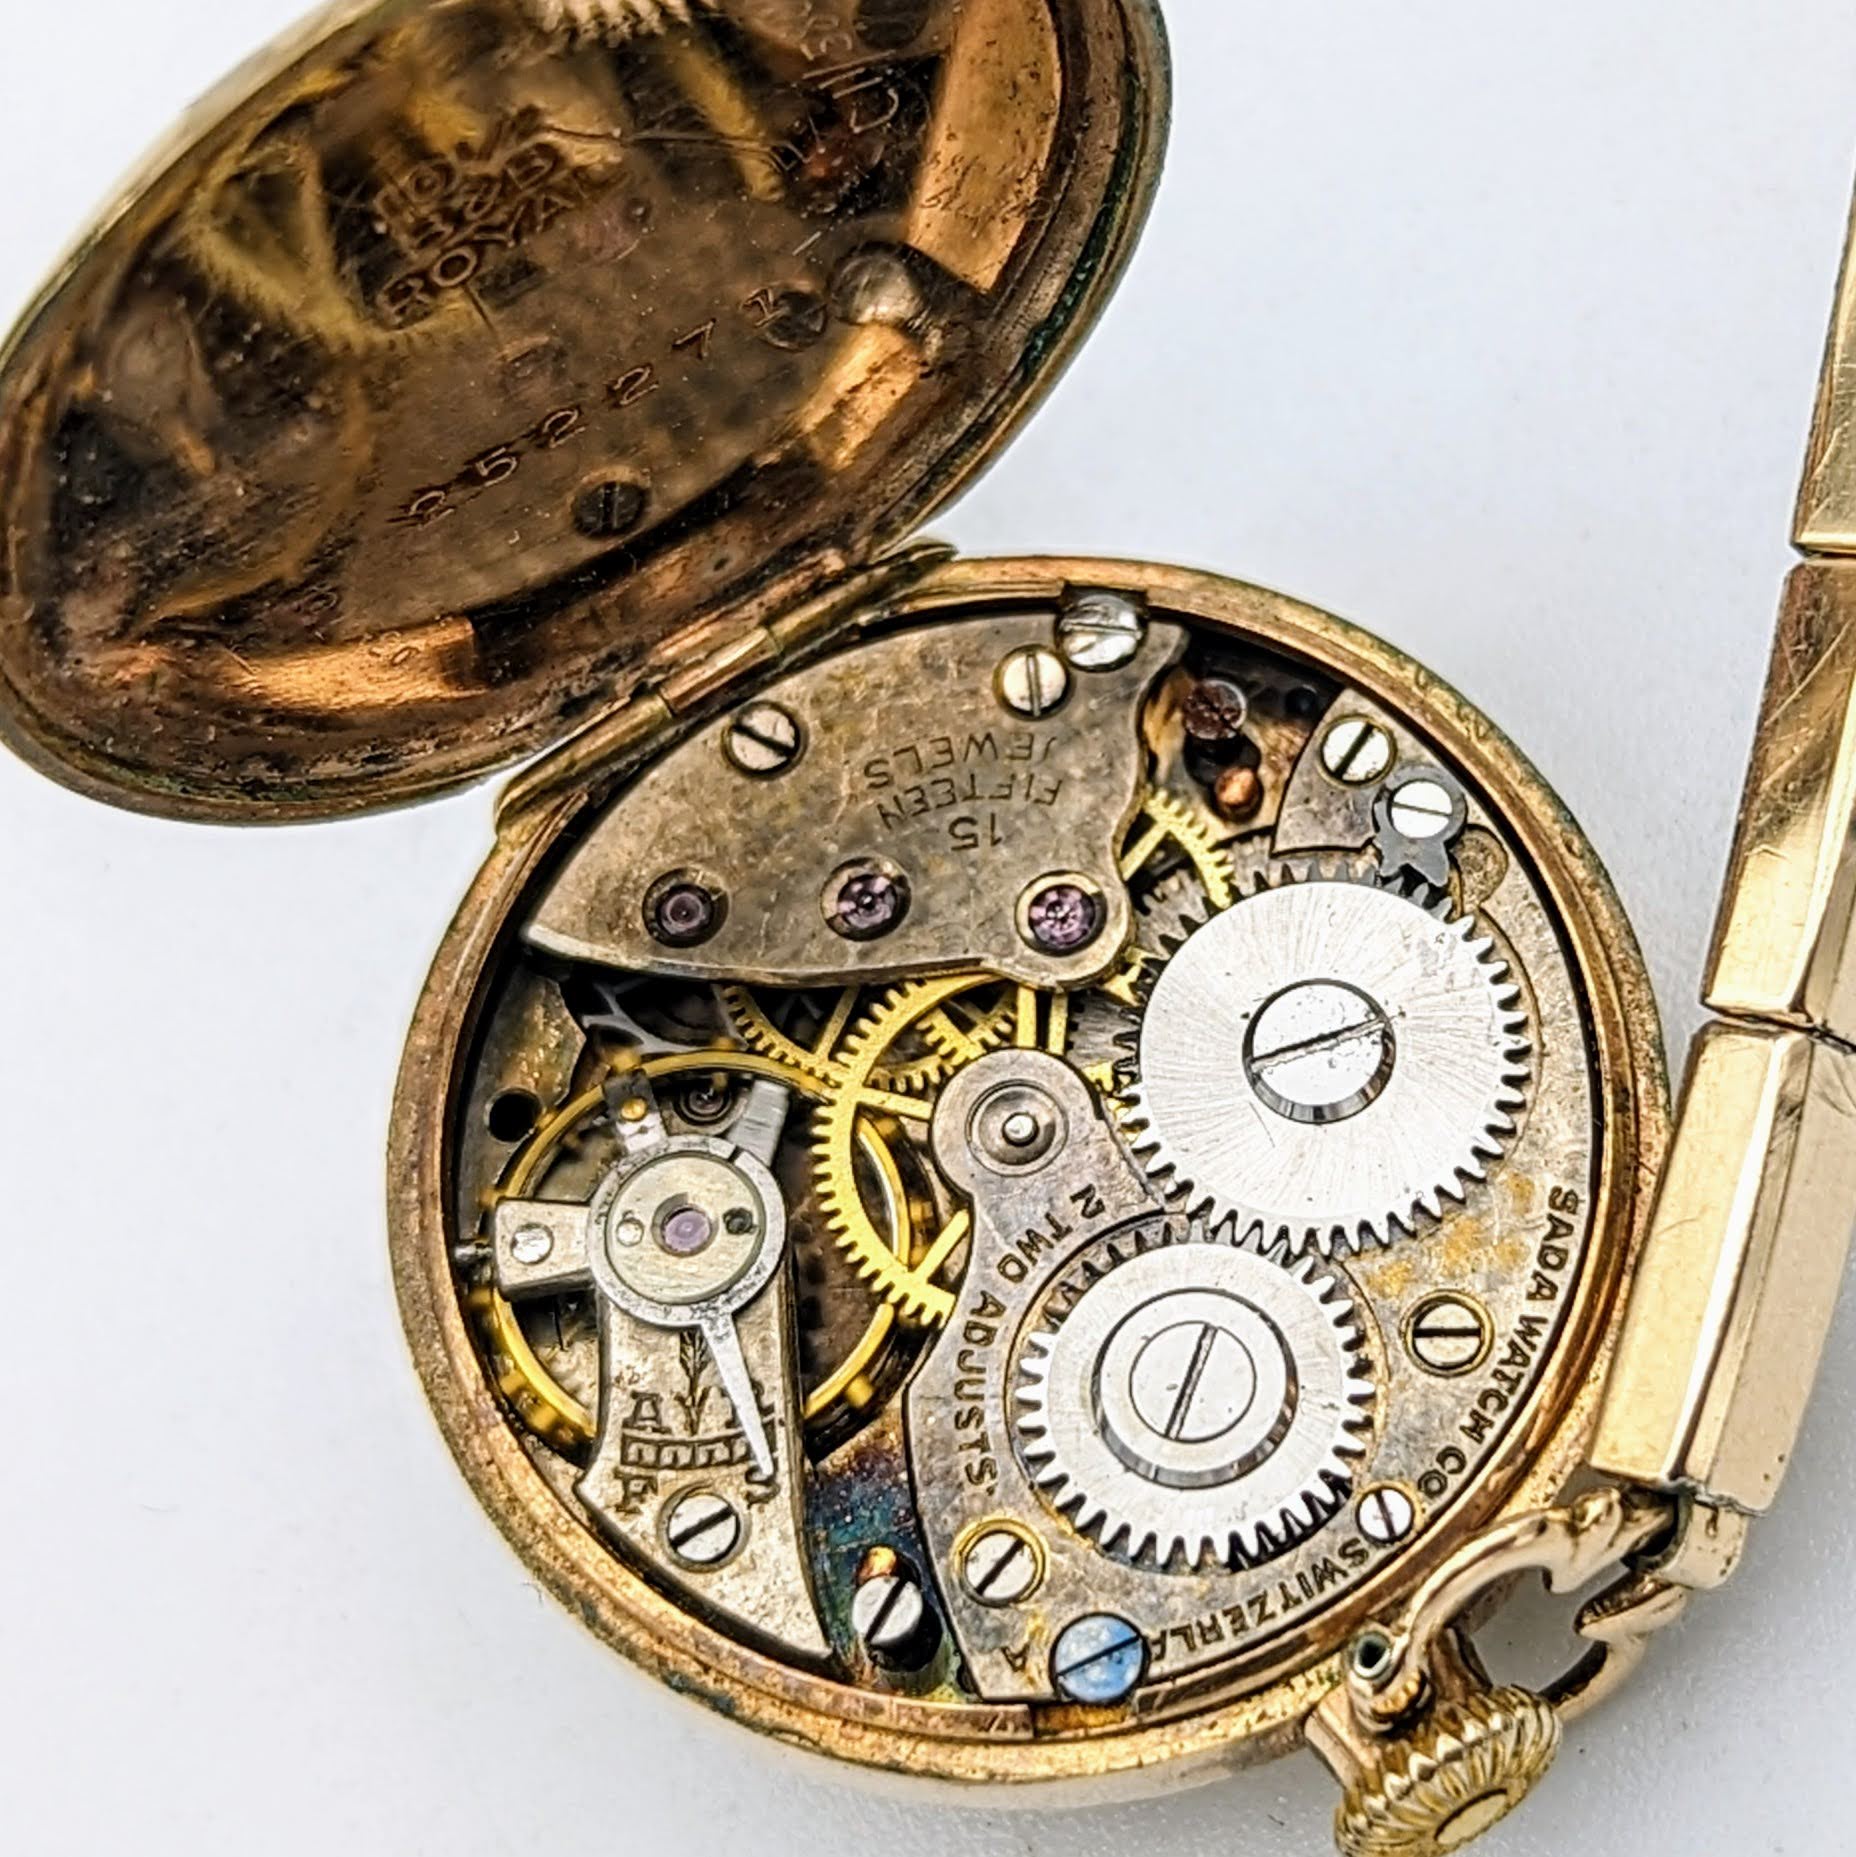 1890s PRIDE Transitional Wristwatch Swiss Movement 15 Jewels 2 Adjustments 12K GF